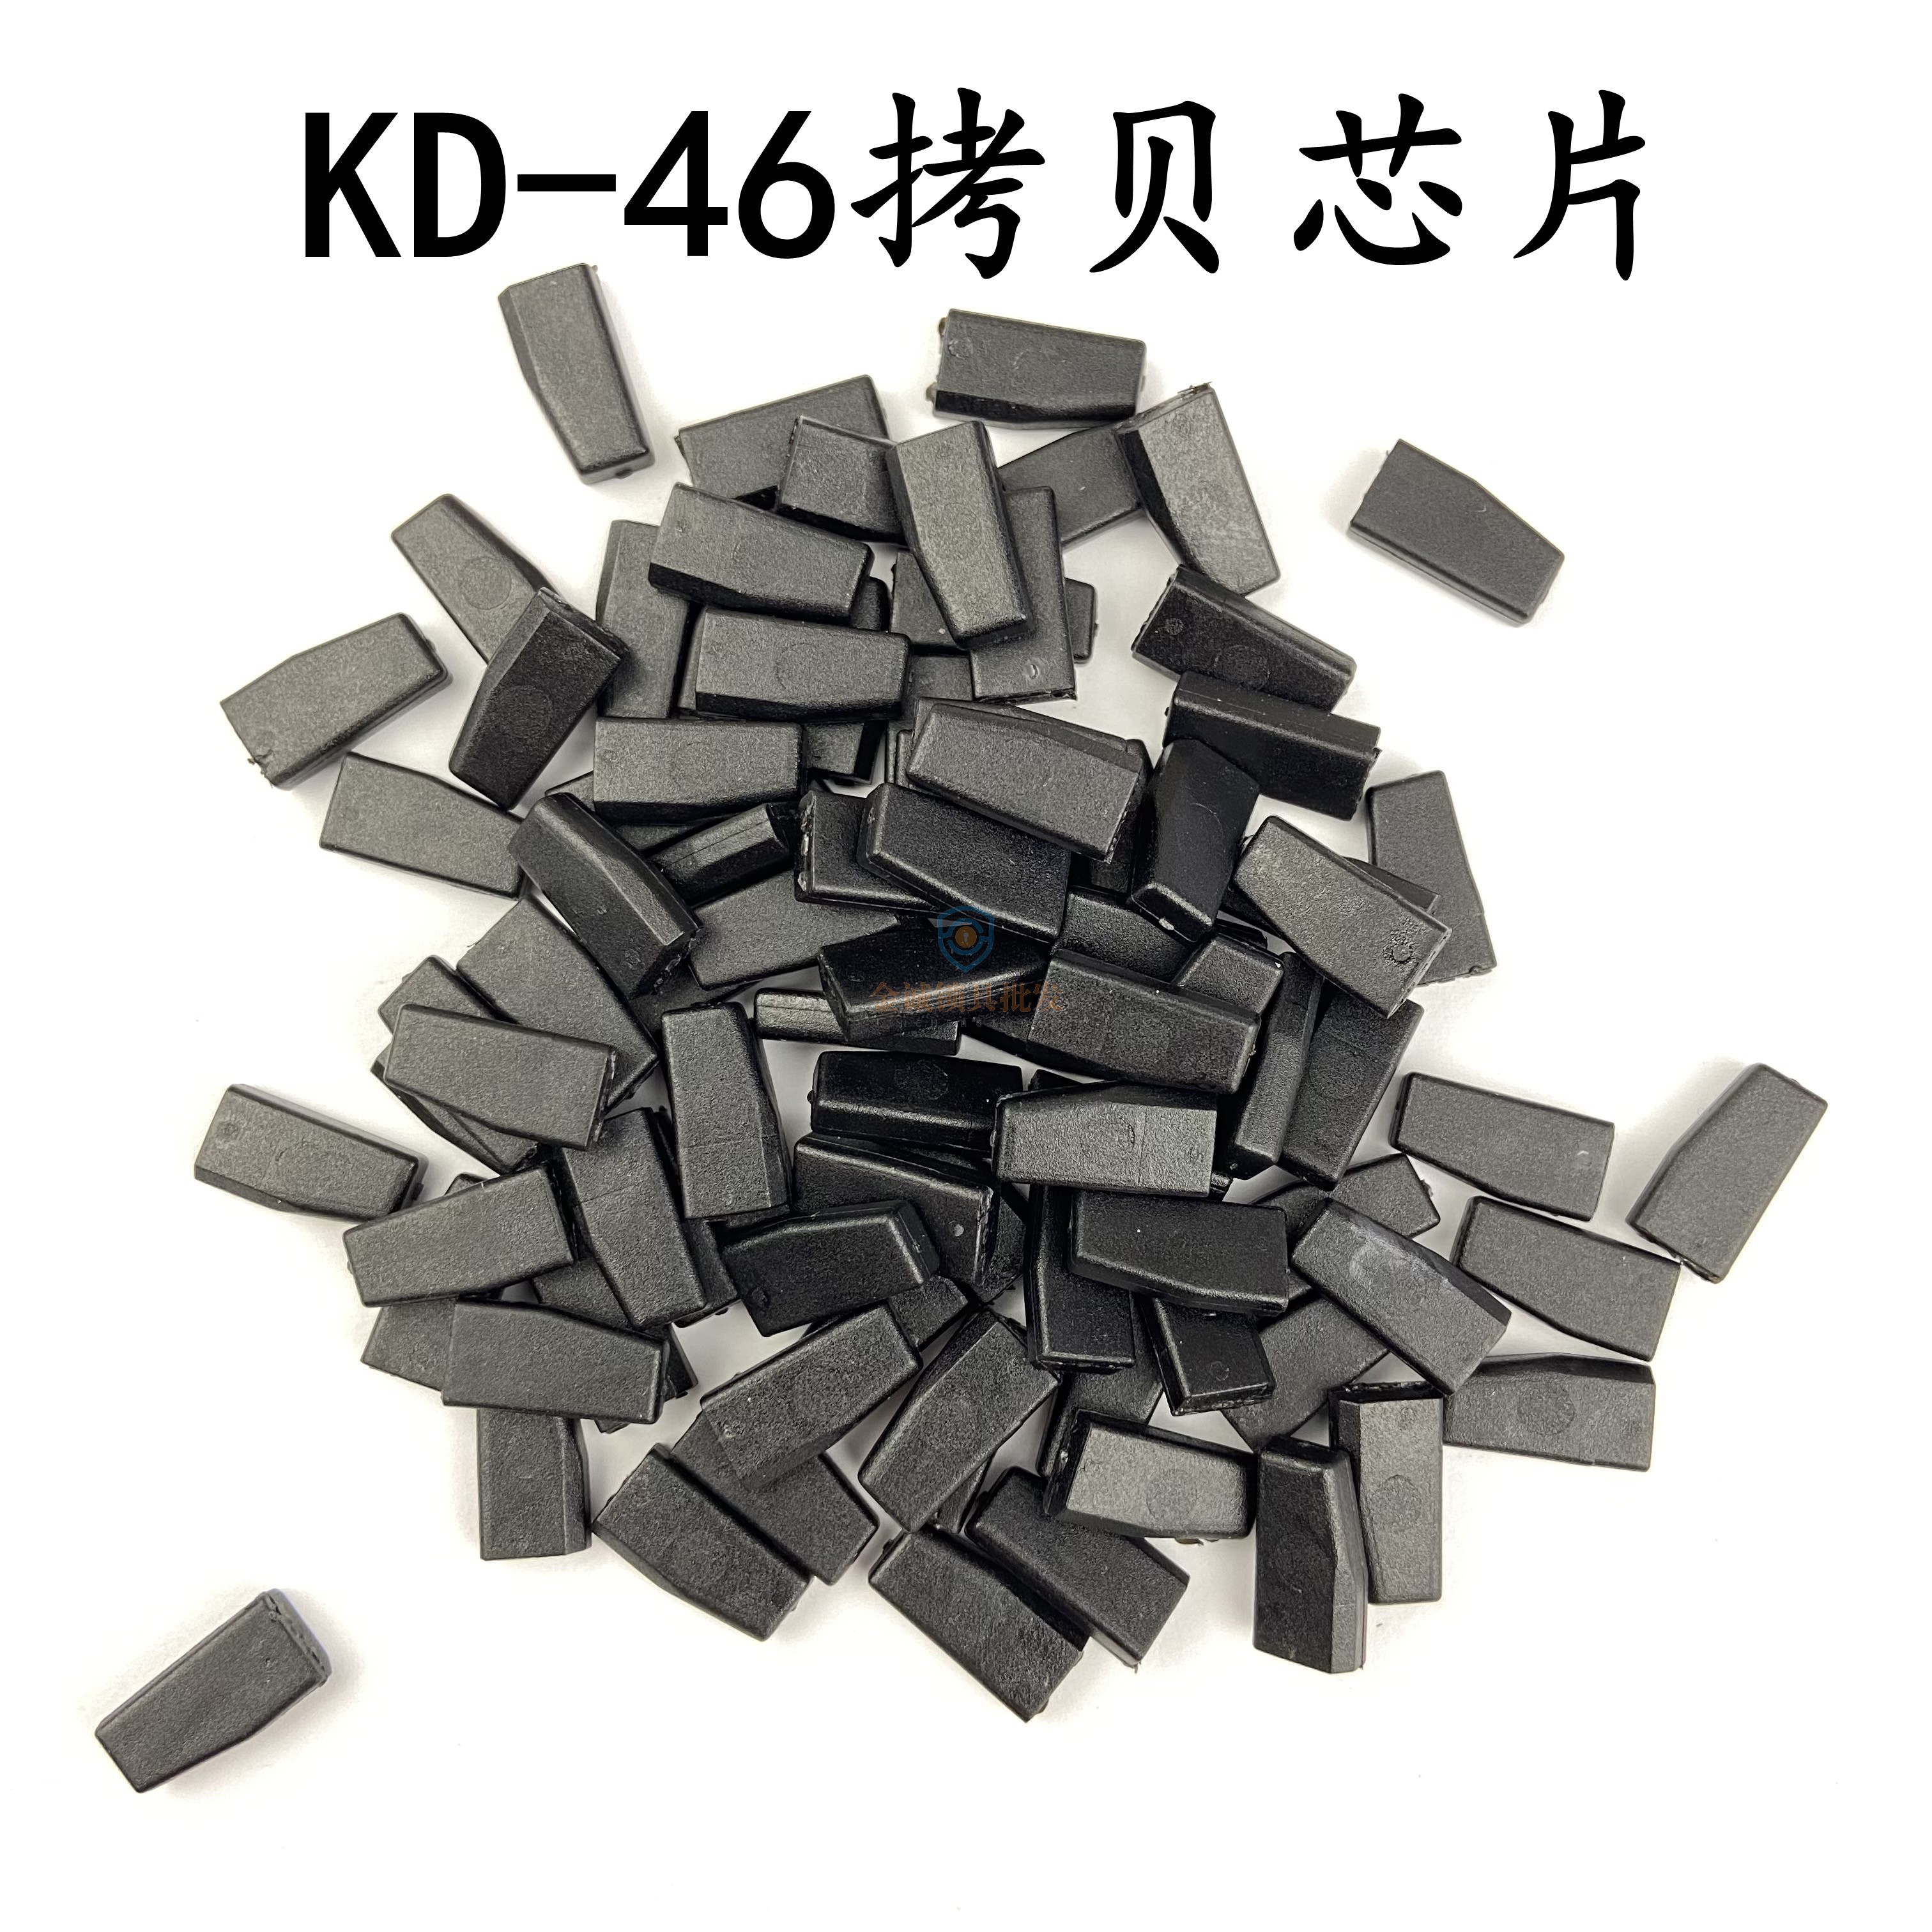 KD拷贝芯片 KD46拷贝芯片 KD4D拷贝芯片 KD46 48 4DG专用拷贝芯片-图3